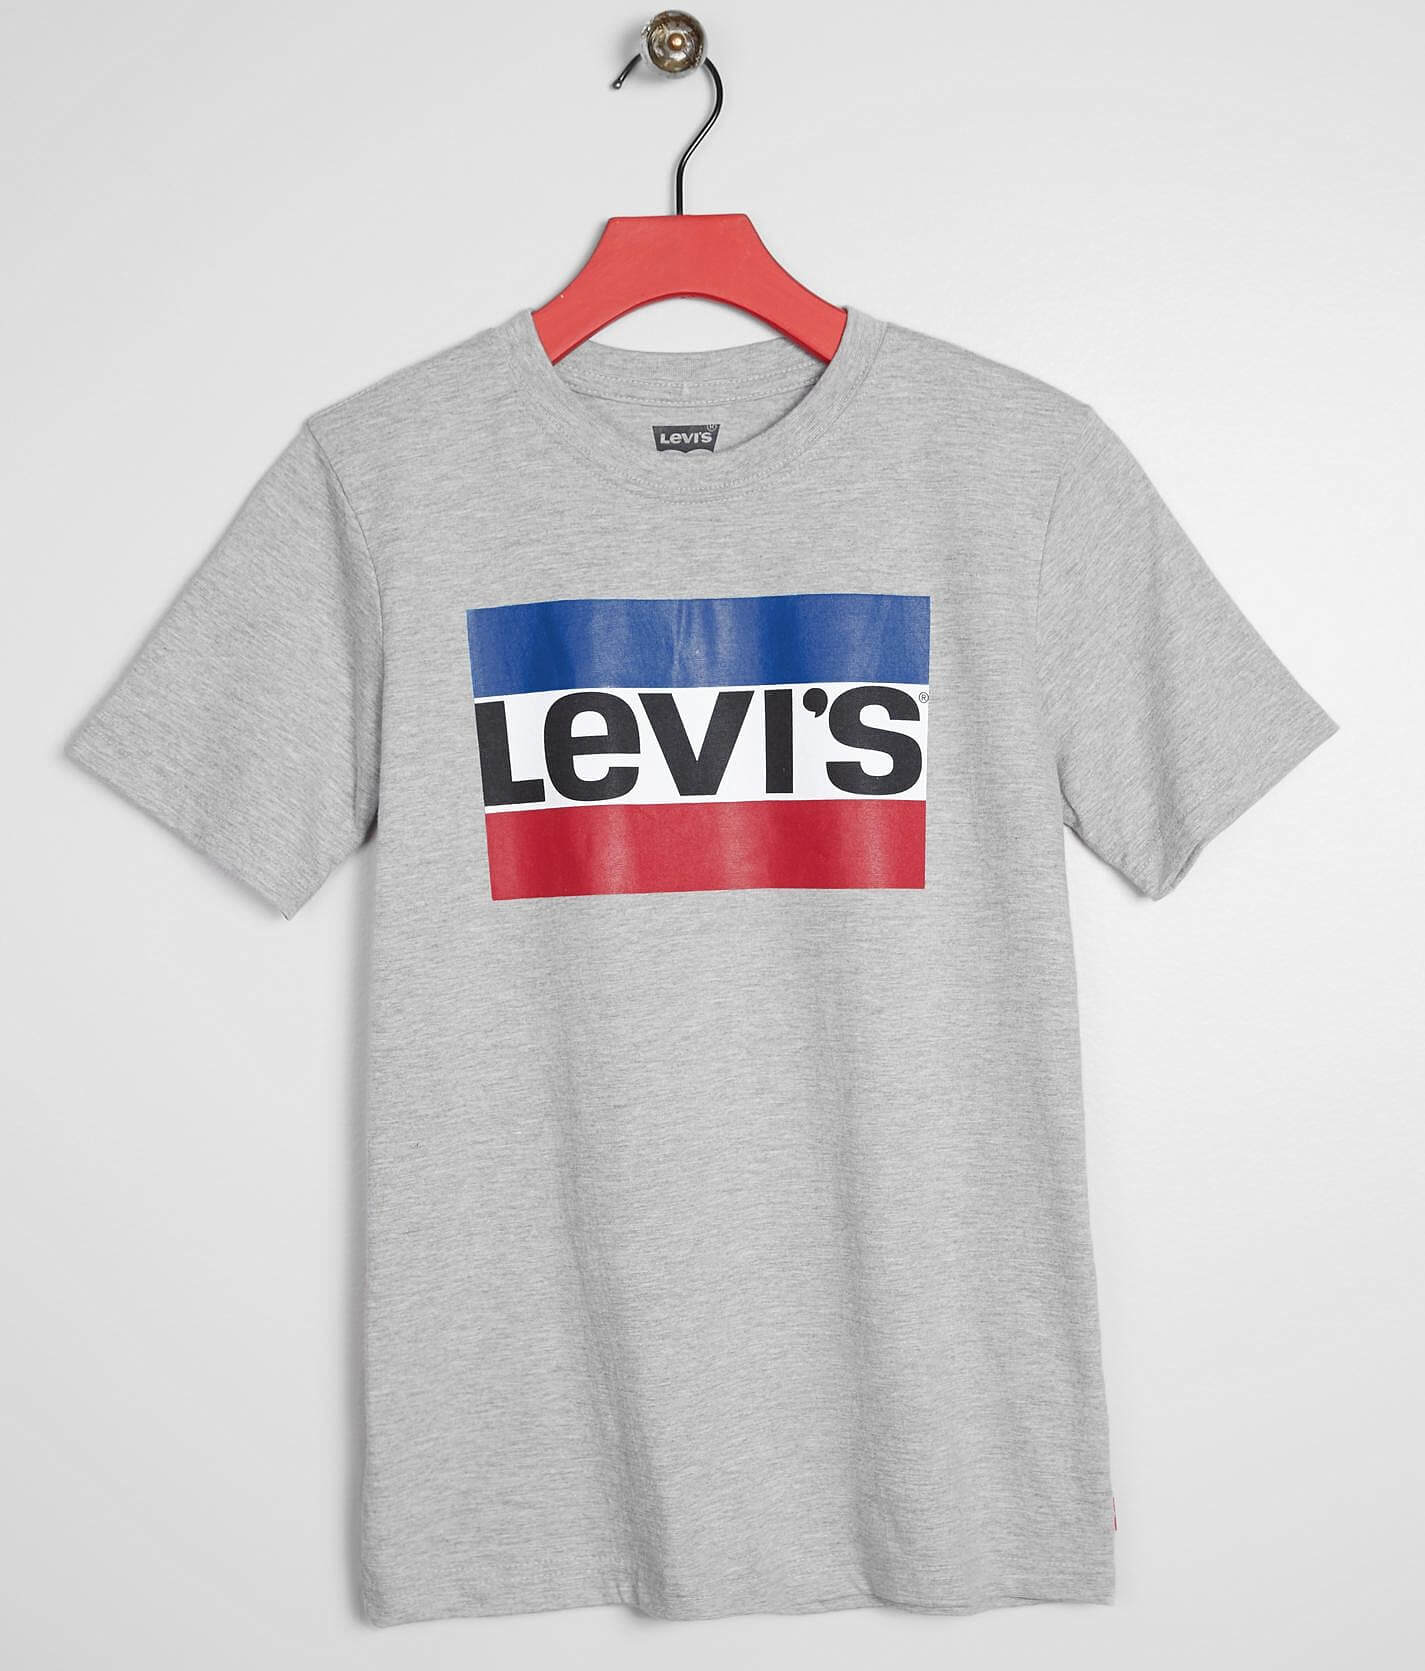 levis t shirt boys